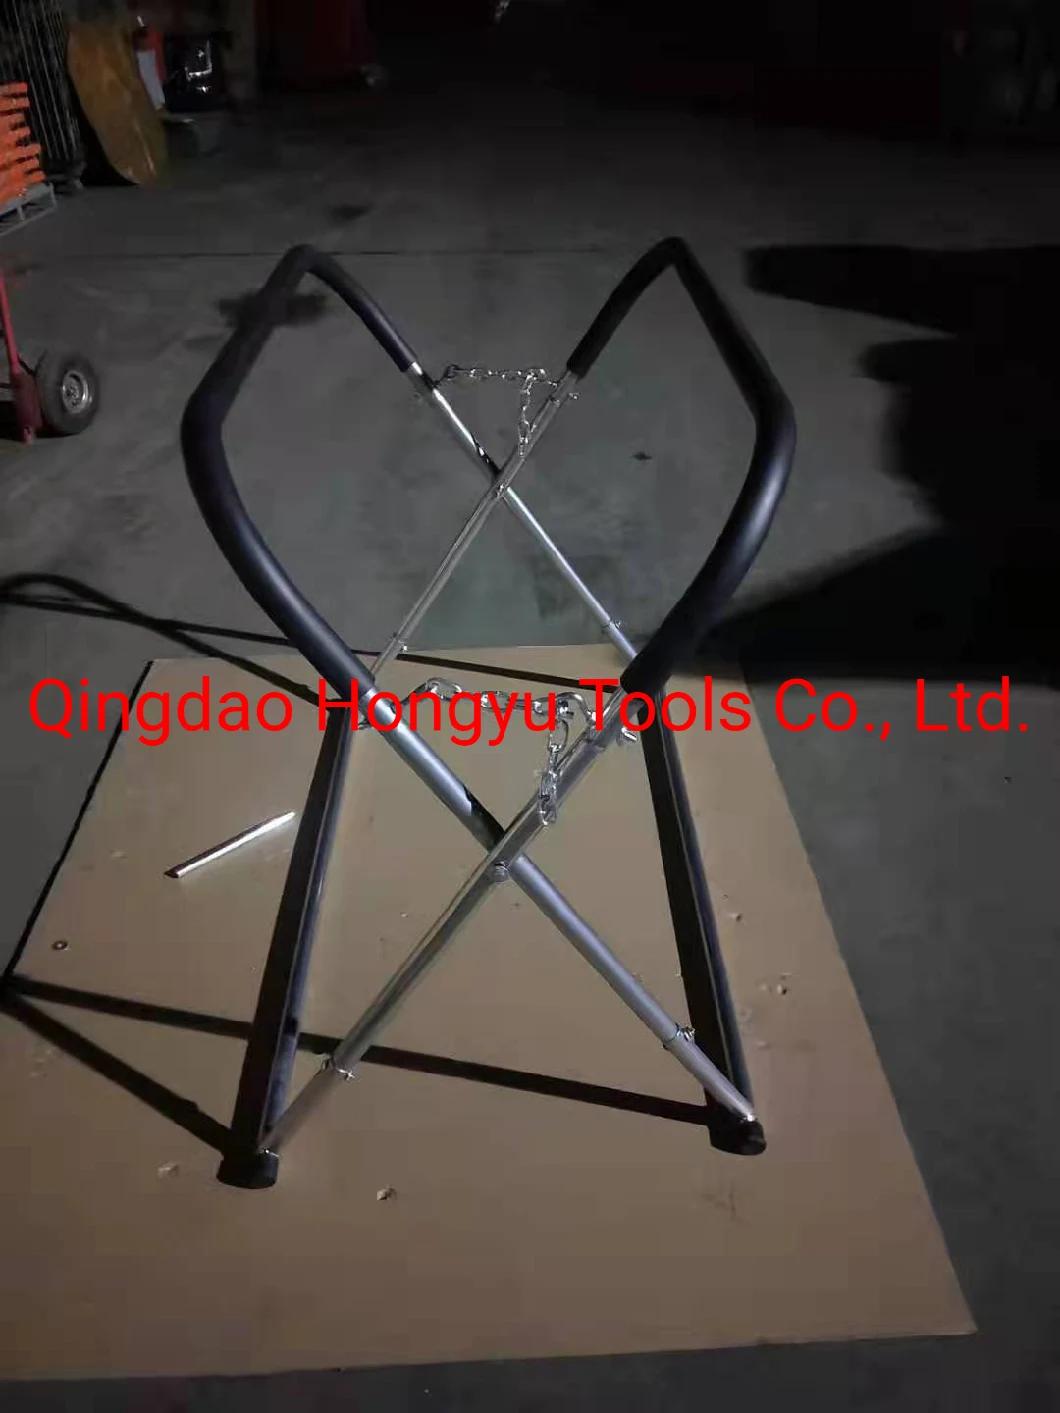 Galvanized Tubular Steel Frame Portable Work Stand Bodyshop Panel Stand, Trestle, Bumper